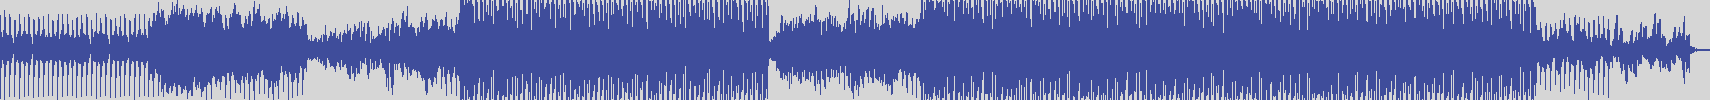 nf_boyz_records [NFY069] Dandy Business - Negotations [Maxi K Mix] audio wave form